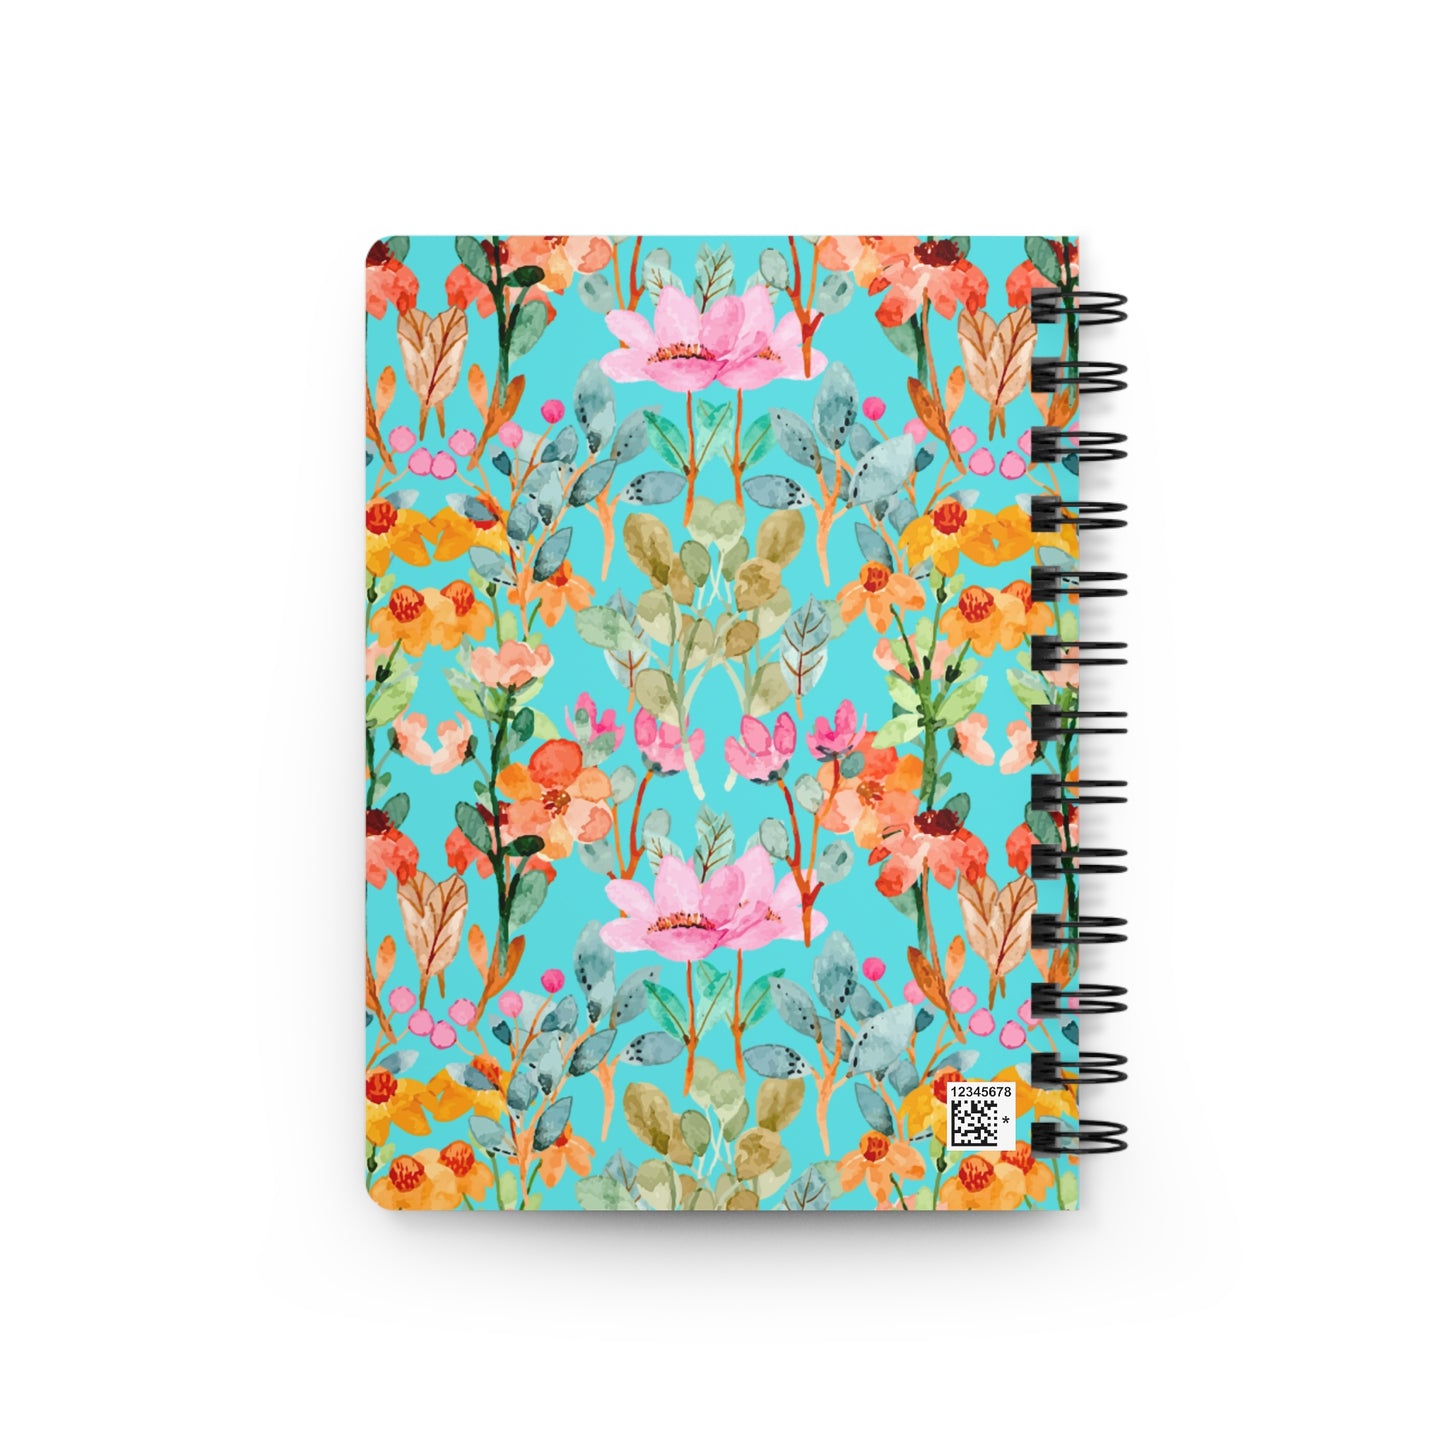 Wildflower Fields Turquoise Writing Sketch Inspiration Spiral Bound Journal